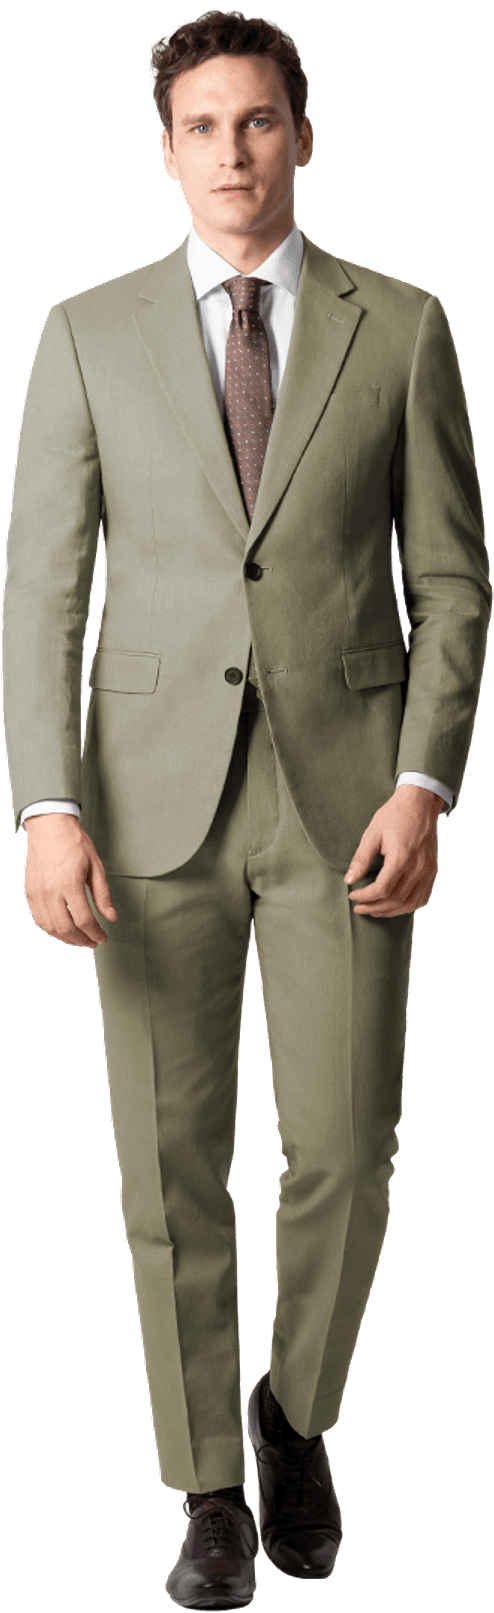 Traje Verde - Tuxedo Clipart - Large Size Png Image - PikPng